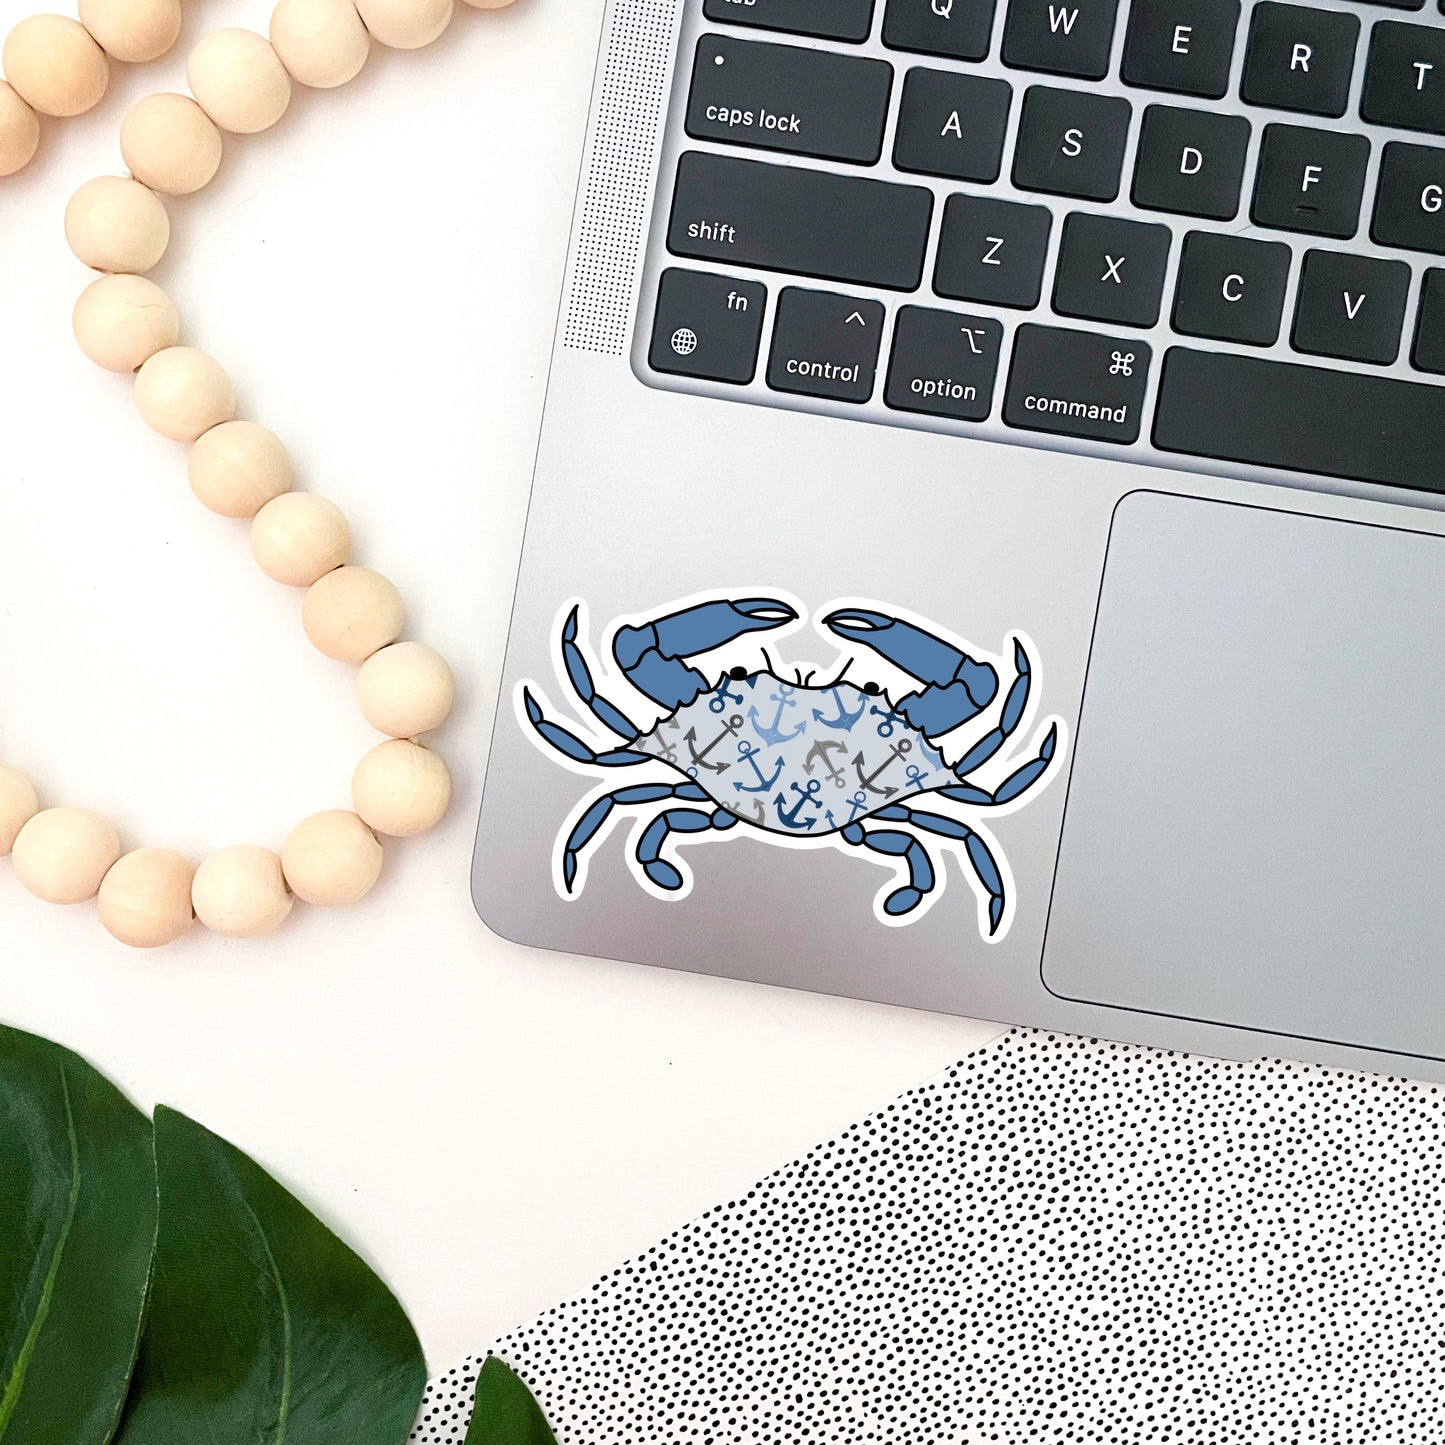 Maryland Nautical Anchor Crab Sticker